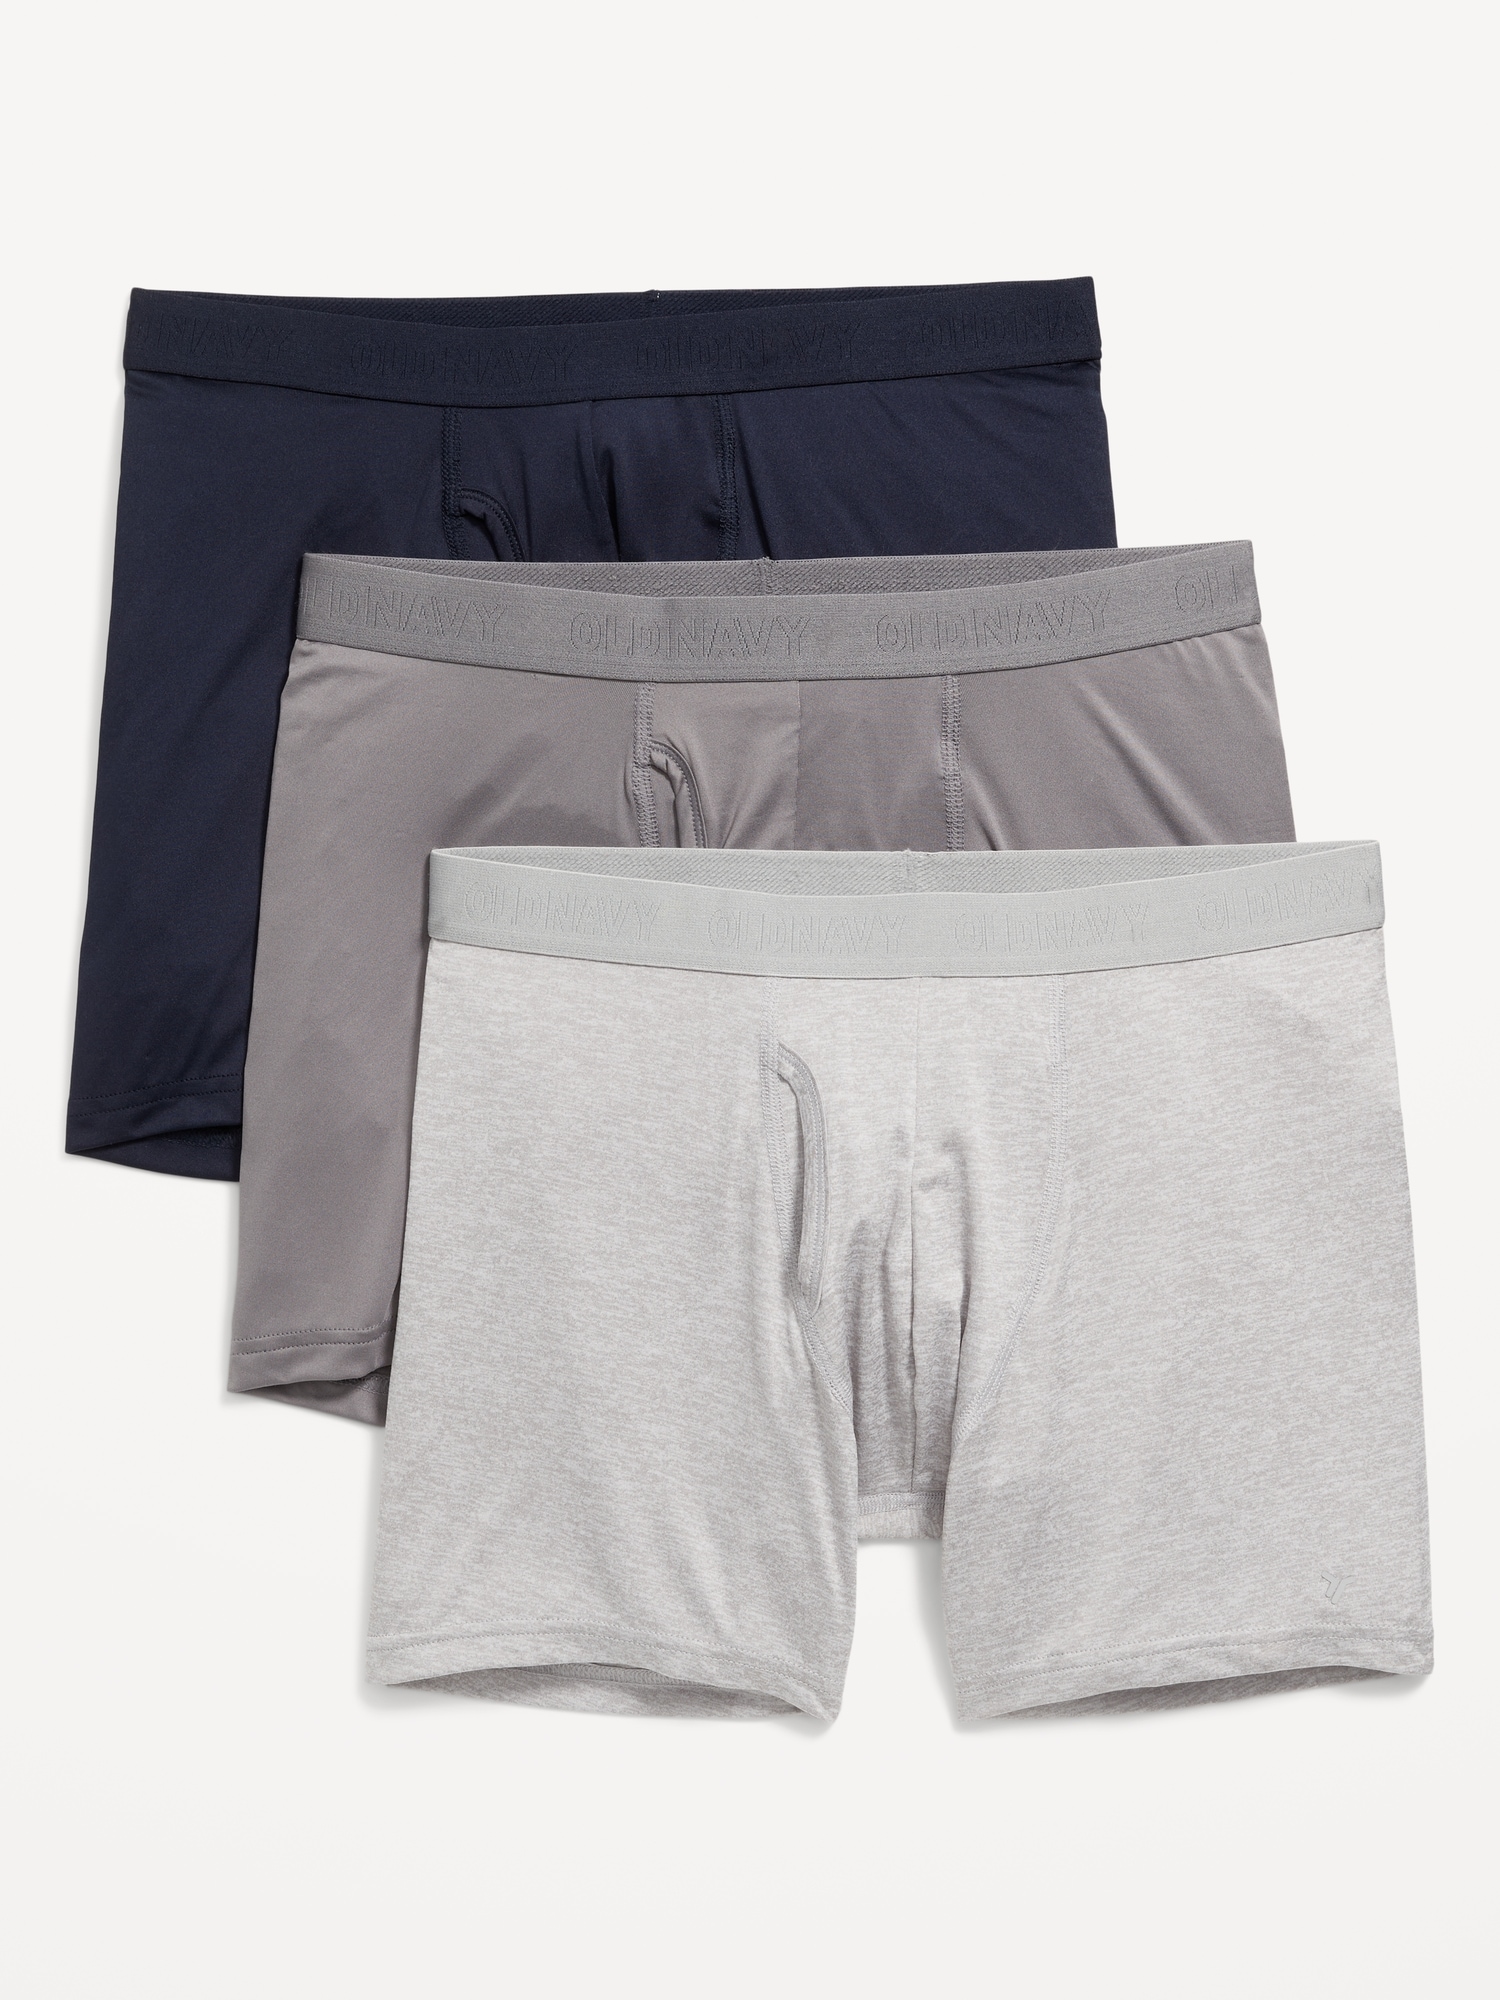 Go-Dry Cool Performance Boxer-Brief Underwear 3-Pack -- 5-inch inseam